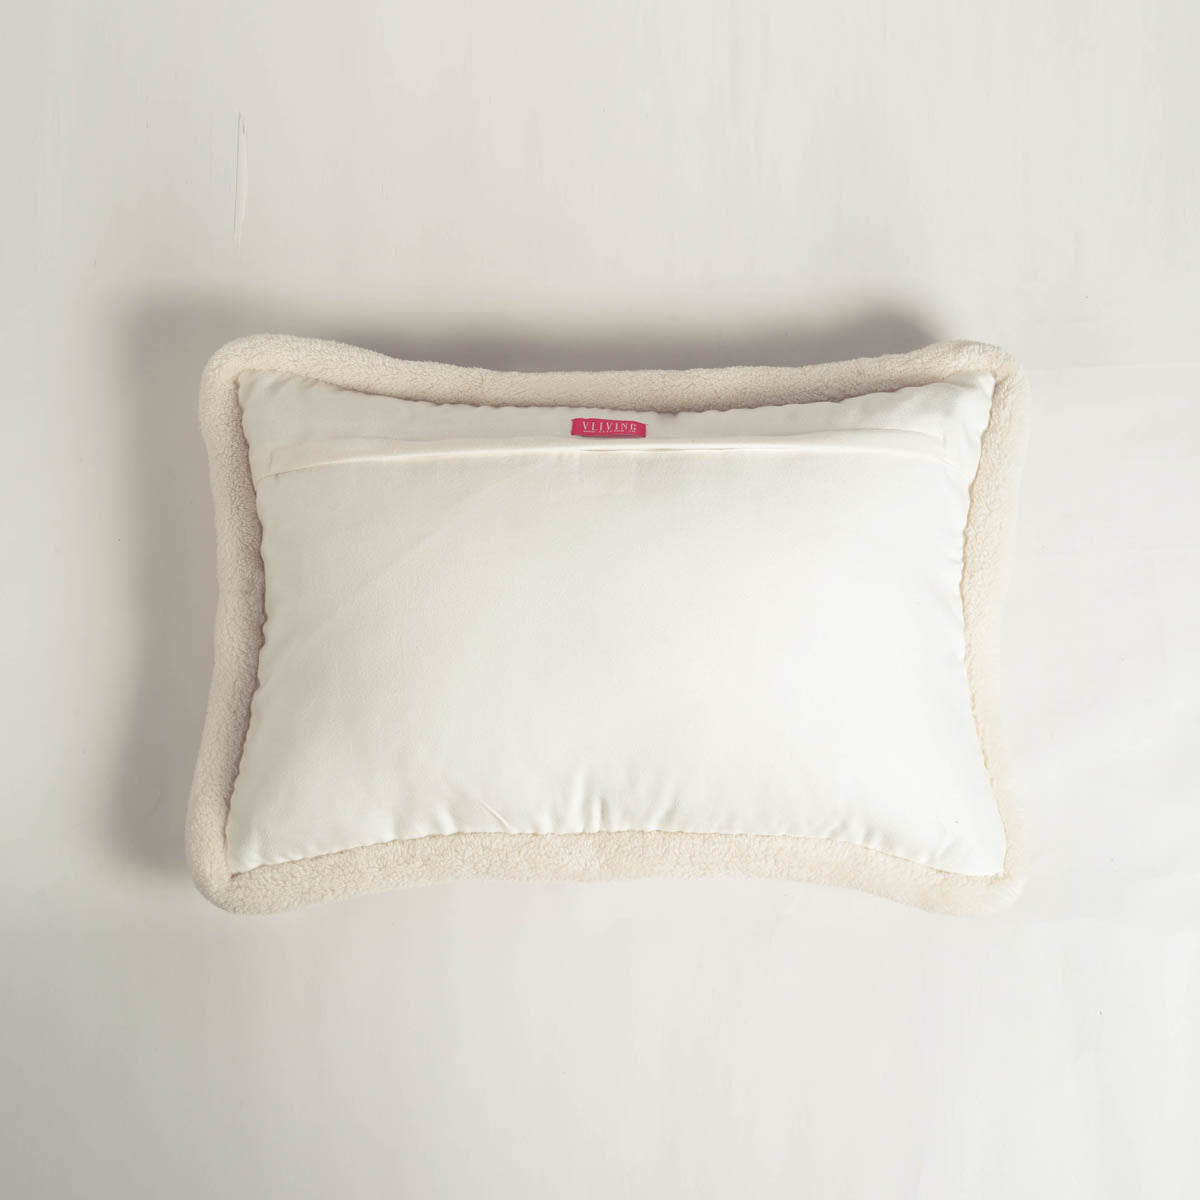 Svenska - Ivory printed cushion cover, nordic style pillow cover, Scandinavian pillow